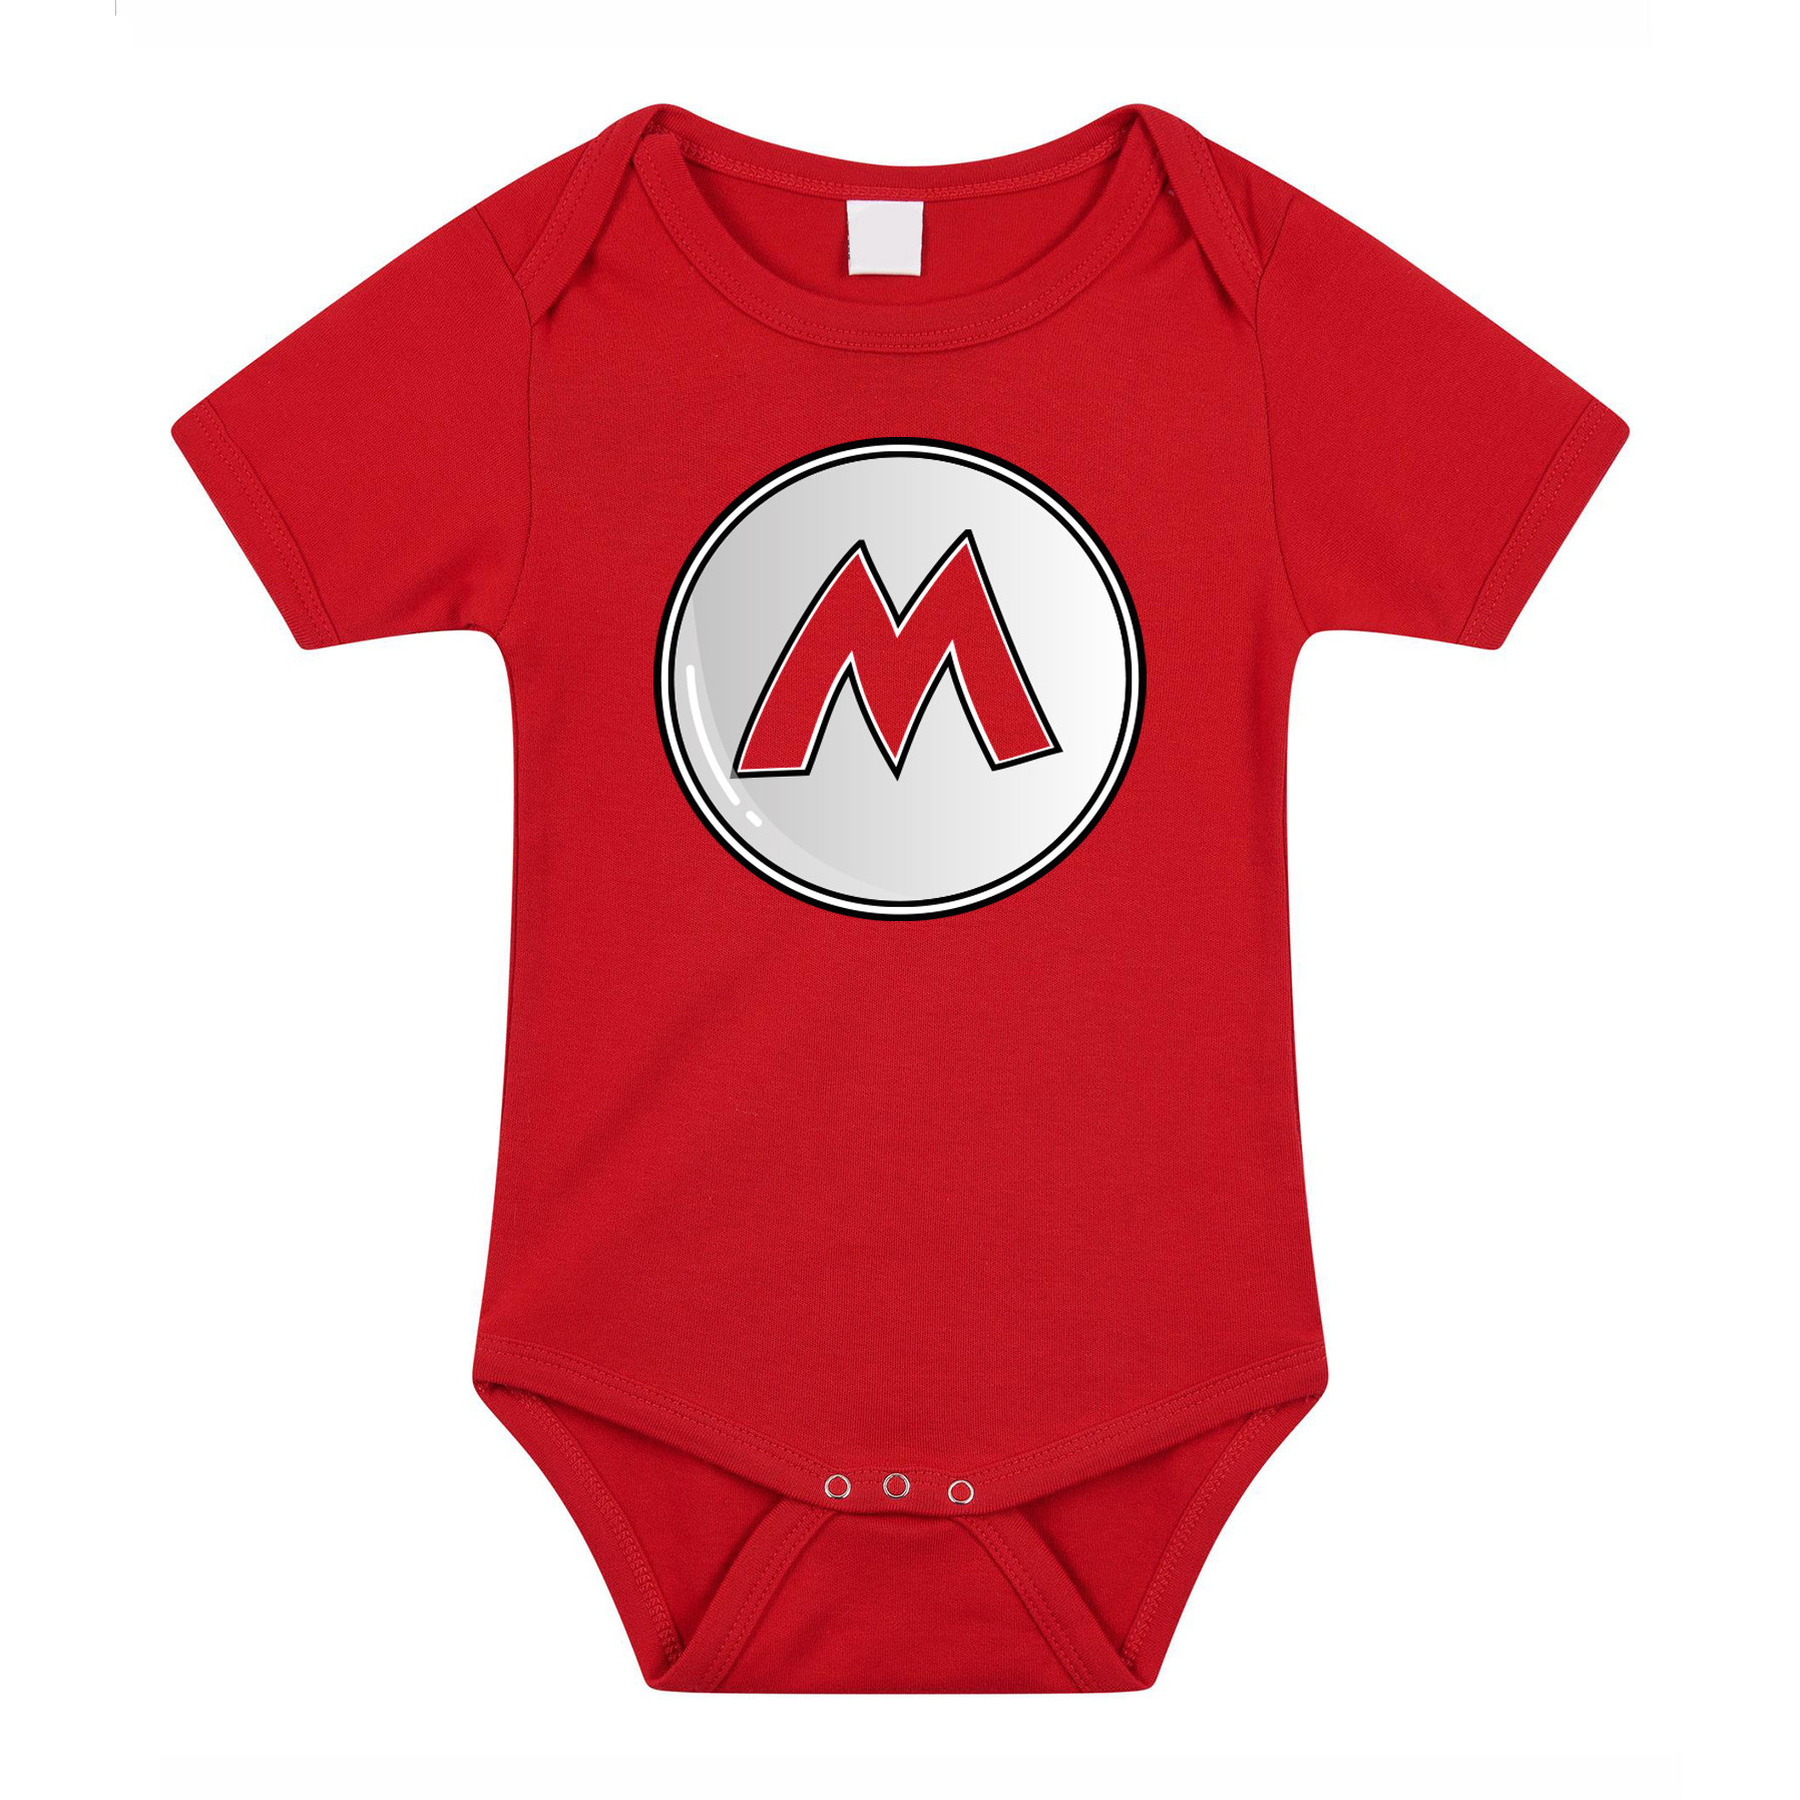 Baby rompertje loodgieter Mario rood kraam cadeau babyshower verkleed-cadeau romper